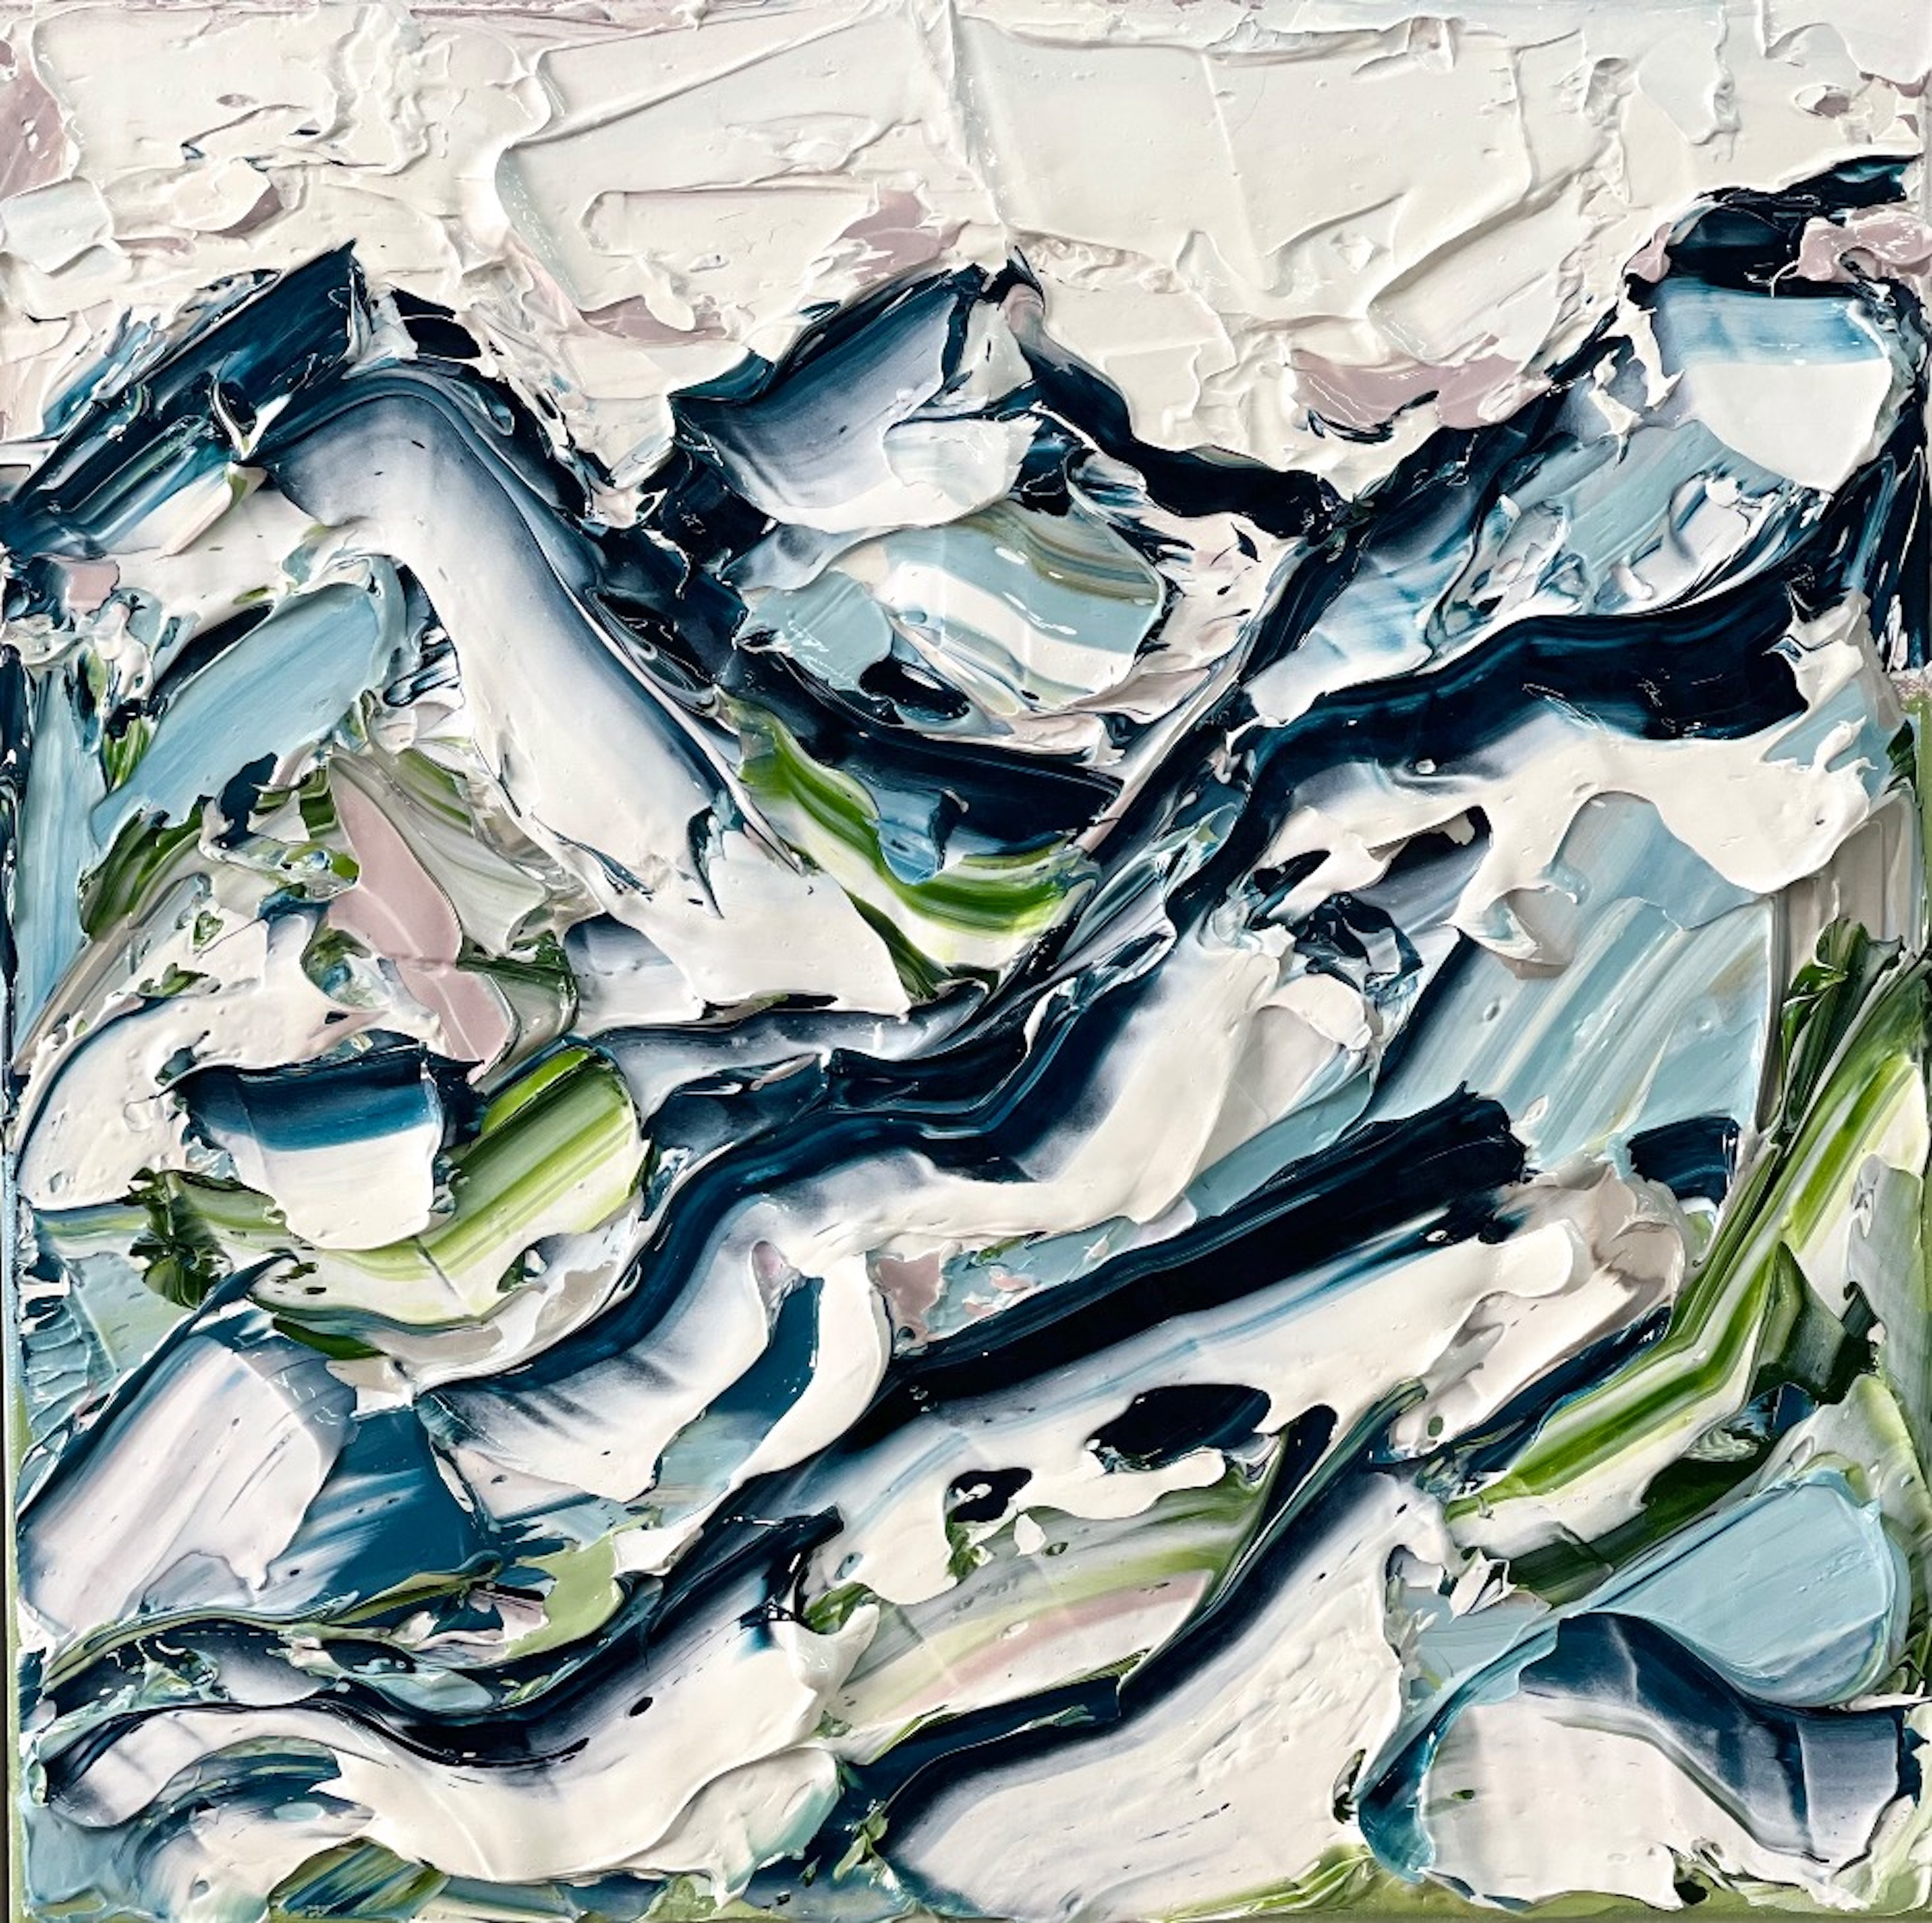 Skii slopes by Felicia Aroney | Lethbridge 20000 2023 Finalists | Lethbridge Gallery